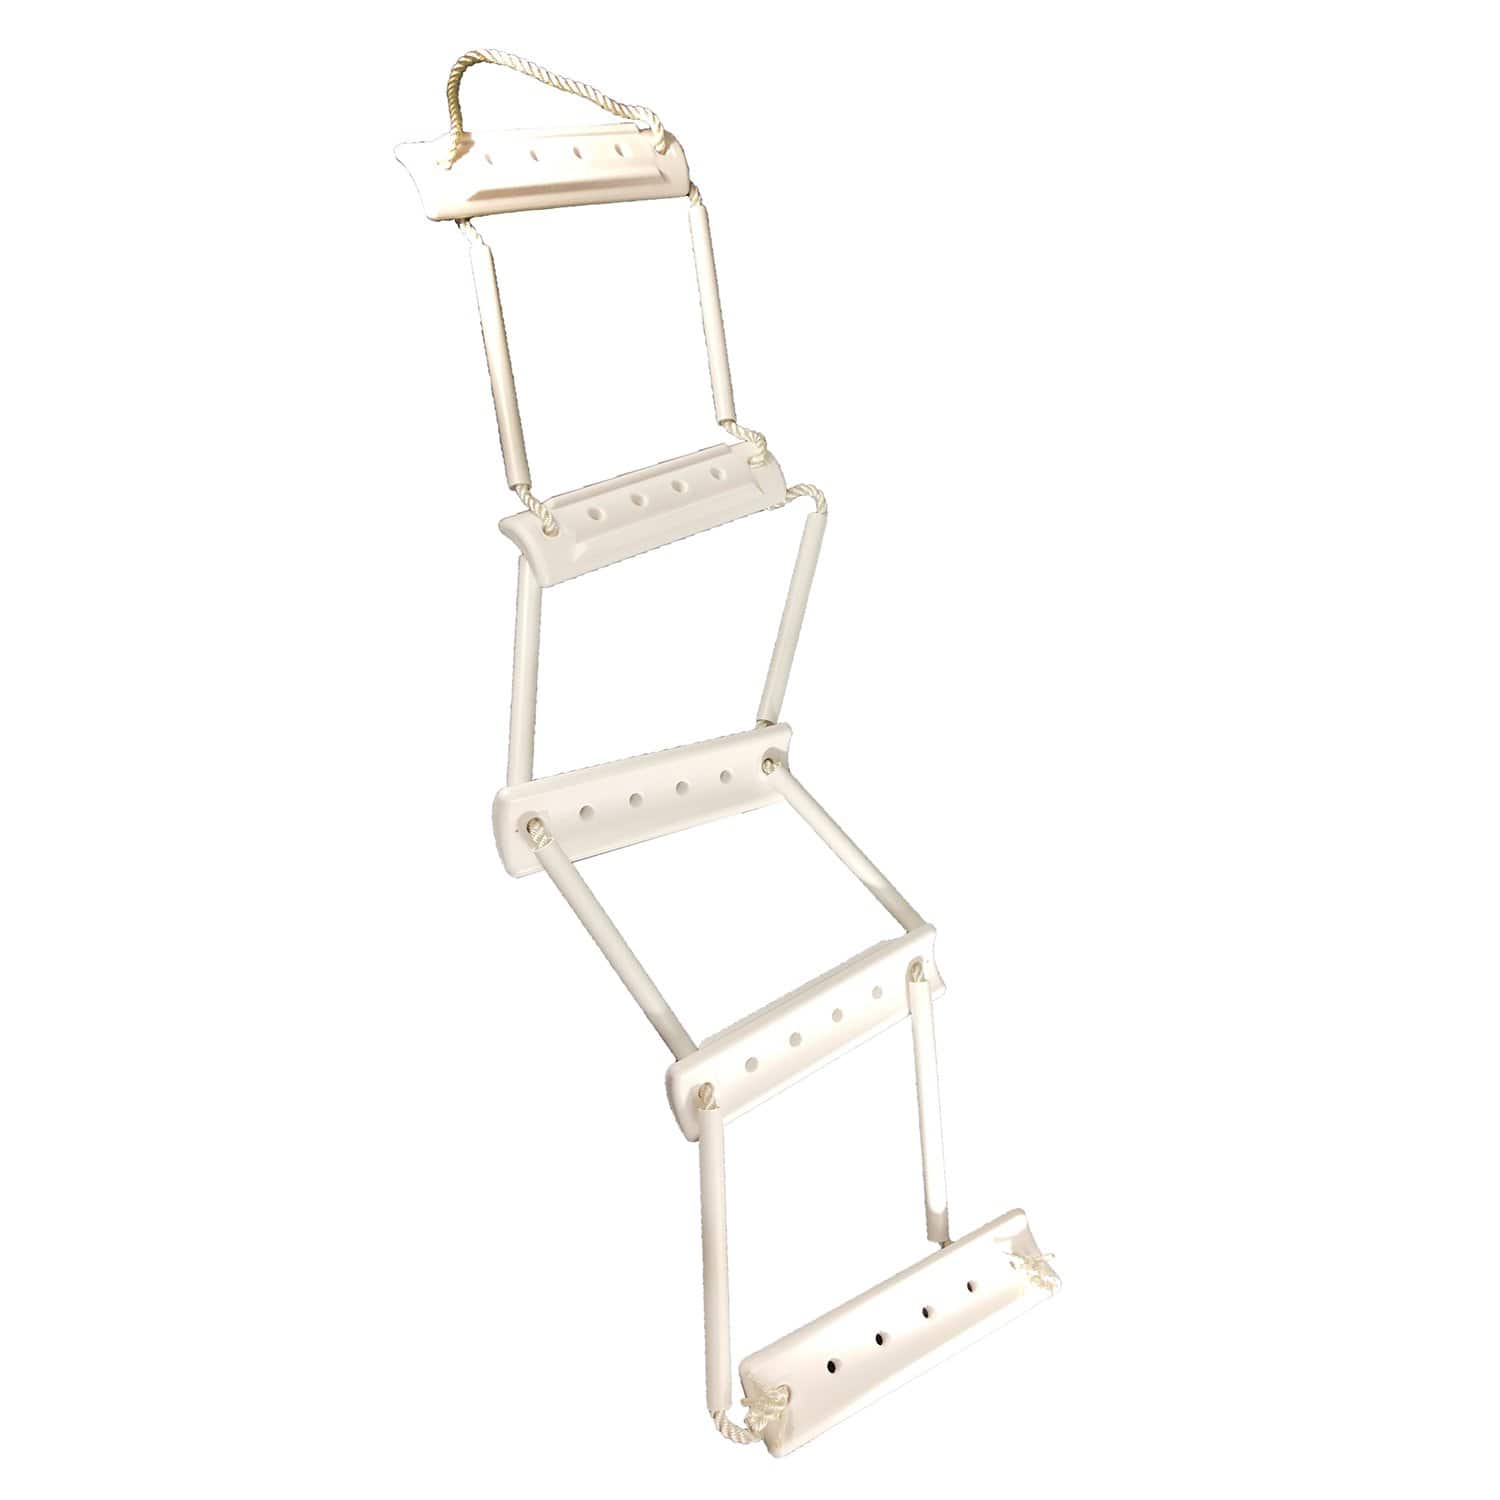 Attwood 11865-4 Rope Step Ladder, White